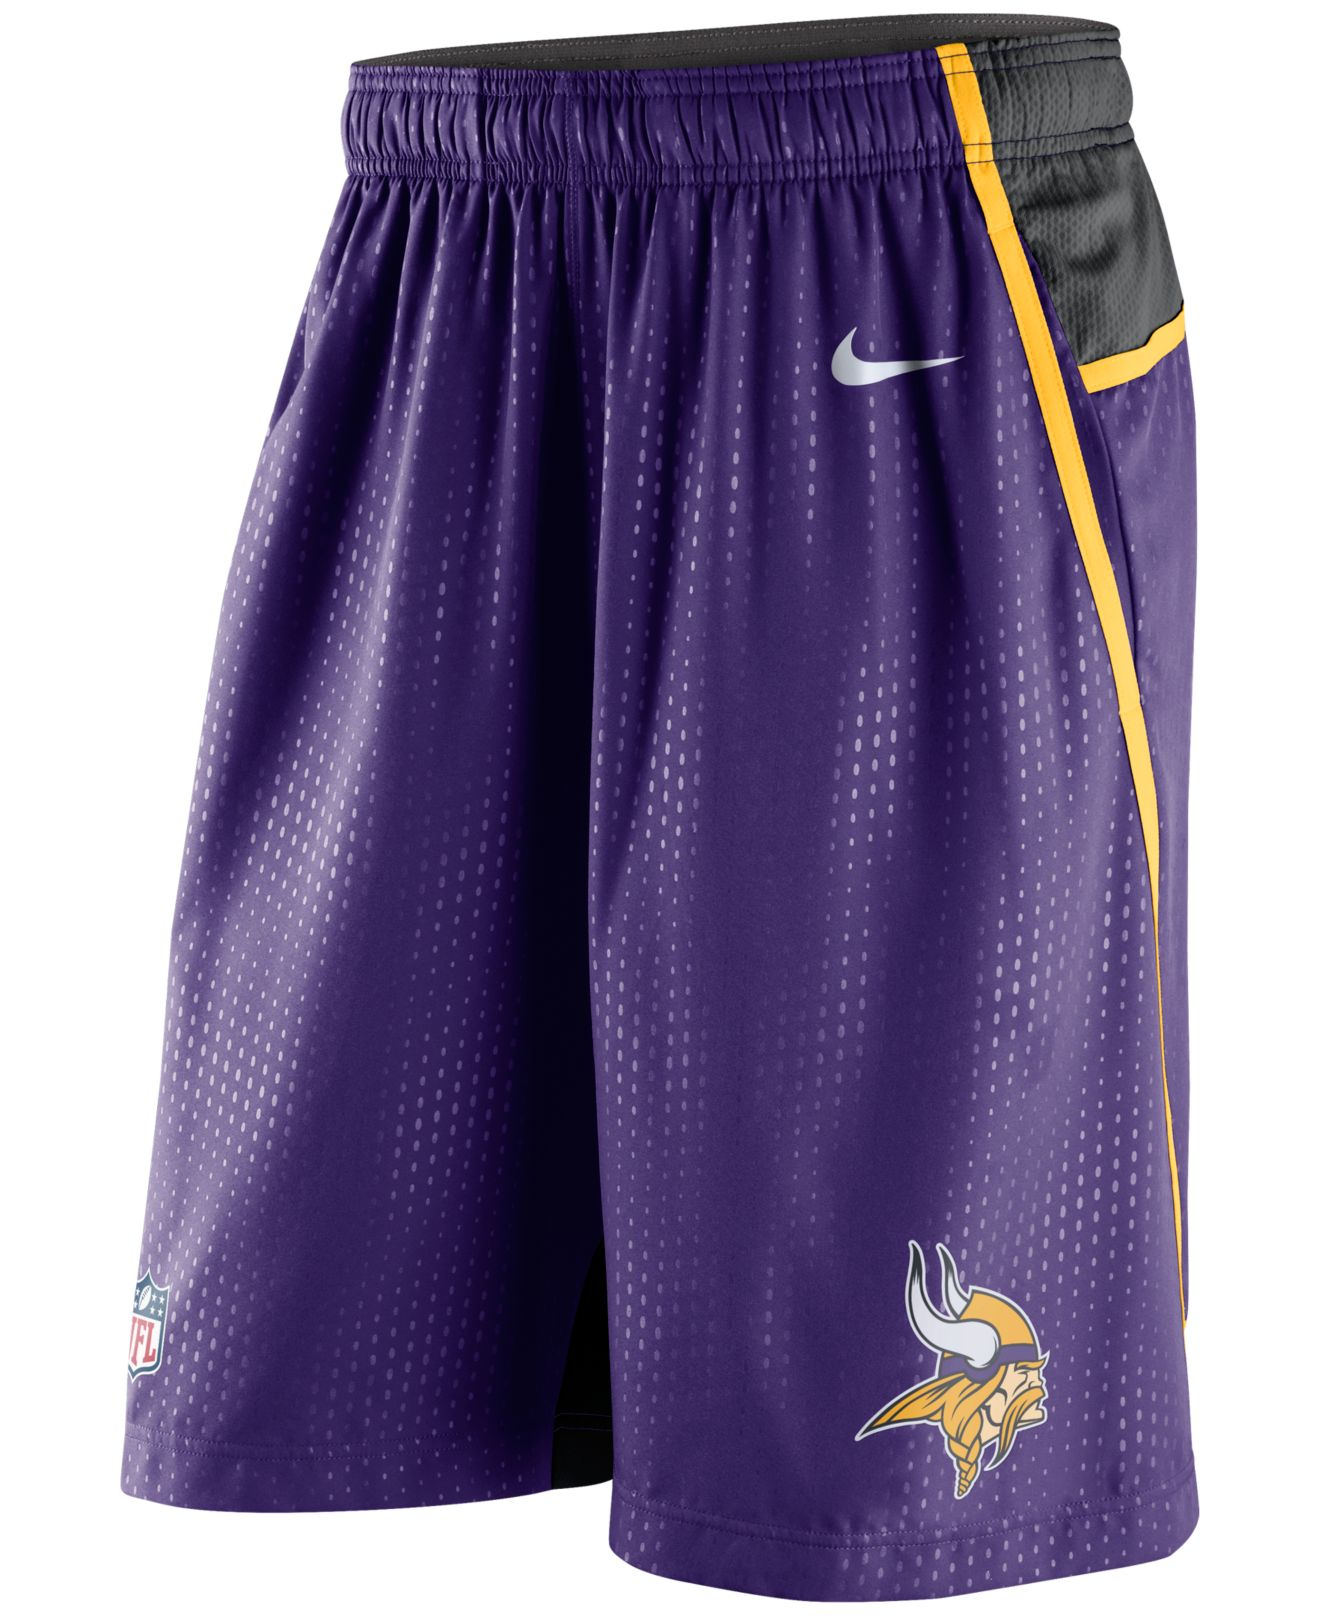 Lyst - Nike Men's Minnesota Vikings Dri-fit Fly Xl 3.0 Shorts in Purple ...